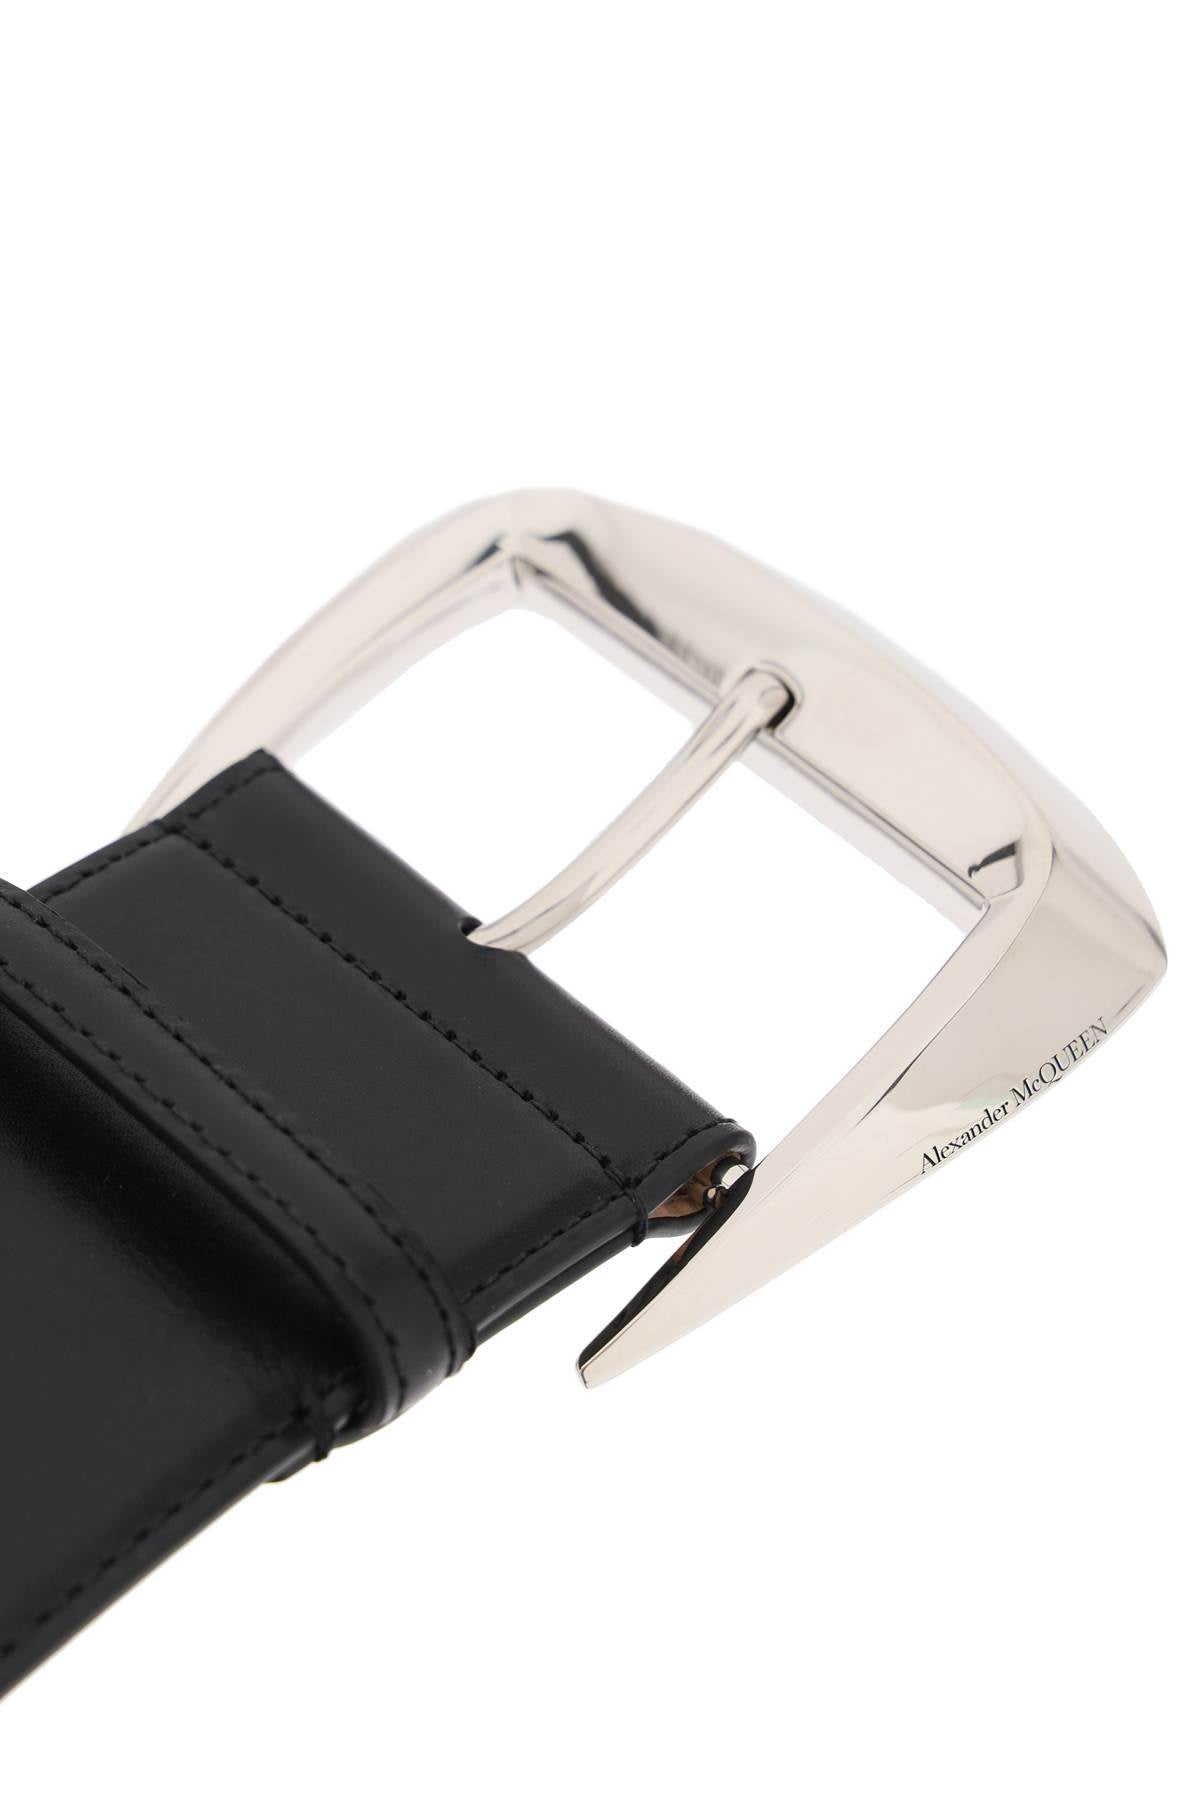 ALEXANDER MCQUEEN Sleek Geometric Waist Belt for Women - Adjustable and Stylish